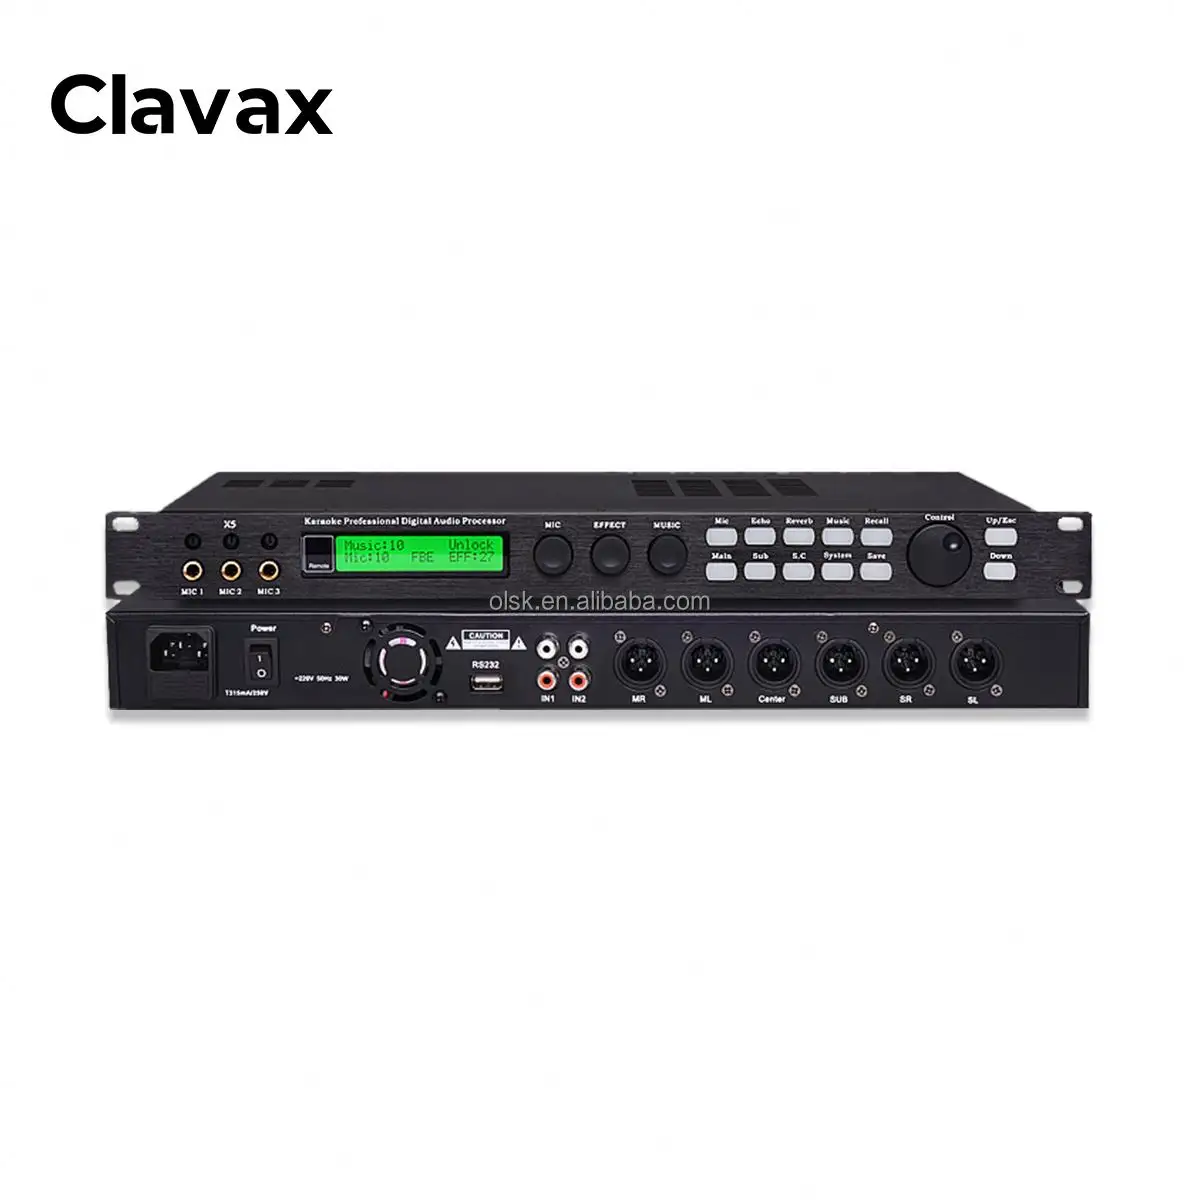 Clavax CLAM-X5 Equalizer musik 7 Channel, mikrofon Equalizer 15 saluran, prosesor profesional Digital Audio efector untuk panggung